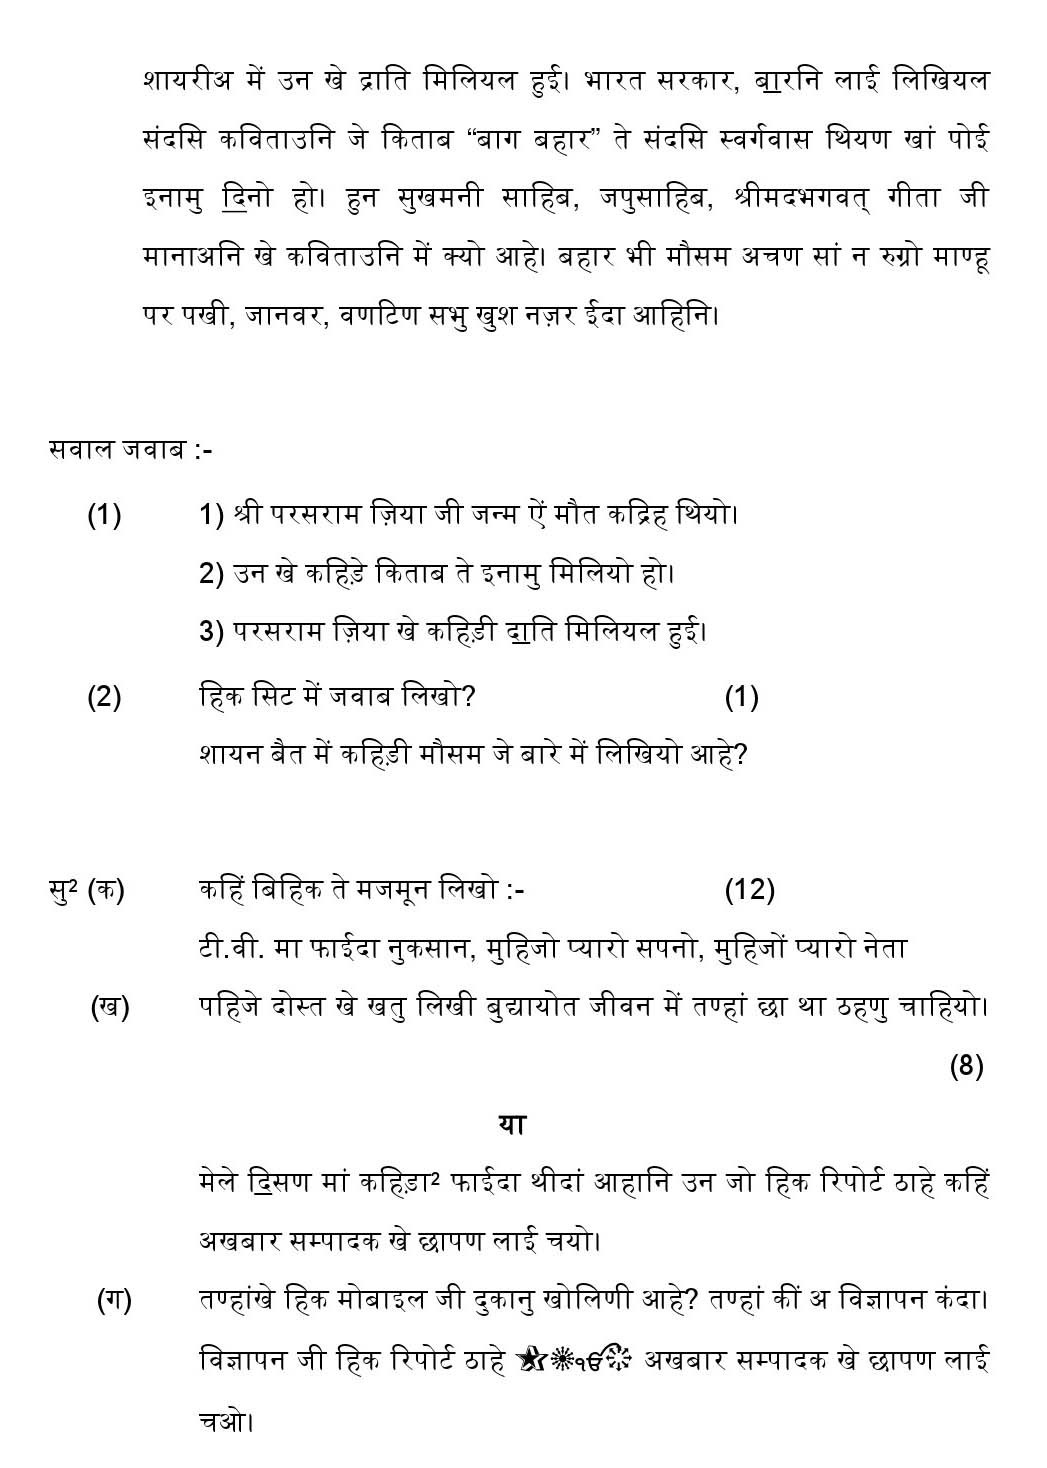 Sindhi CBSE Class X Sample Question Paper 2018-19 - Image 2